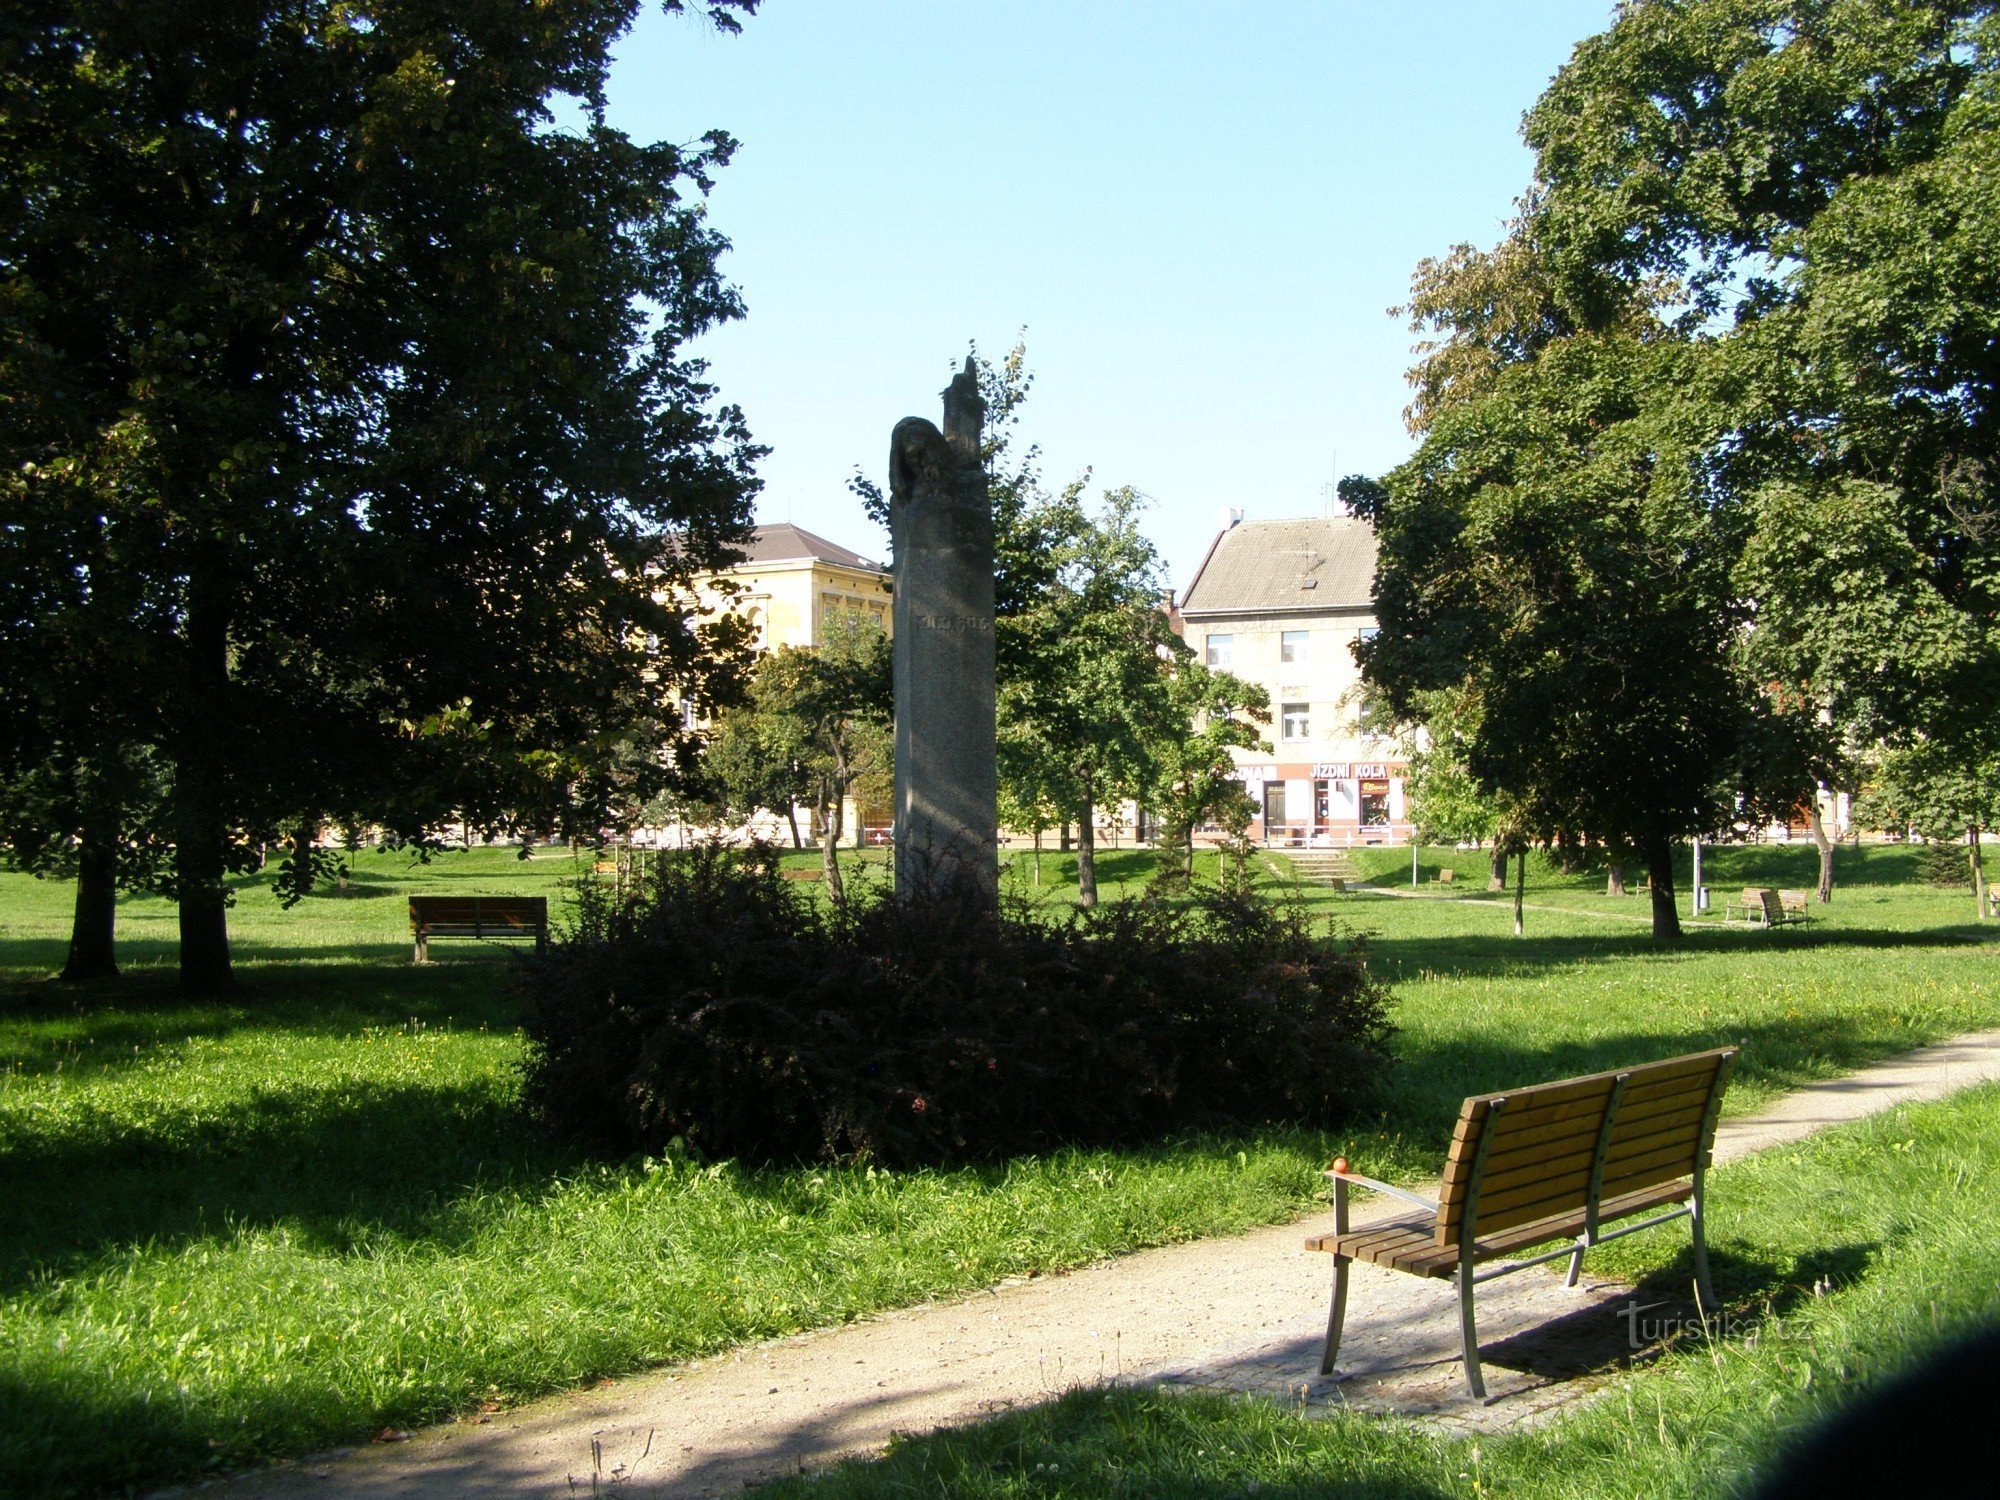 Градец Кралове - пам'ятник Яну Гусу в Сукових садах